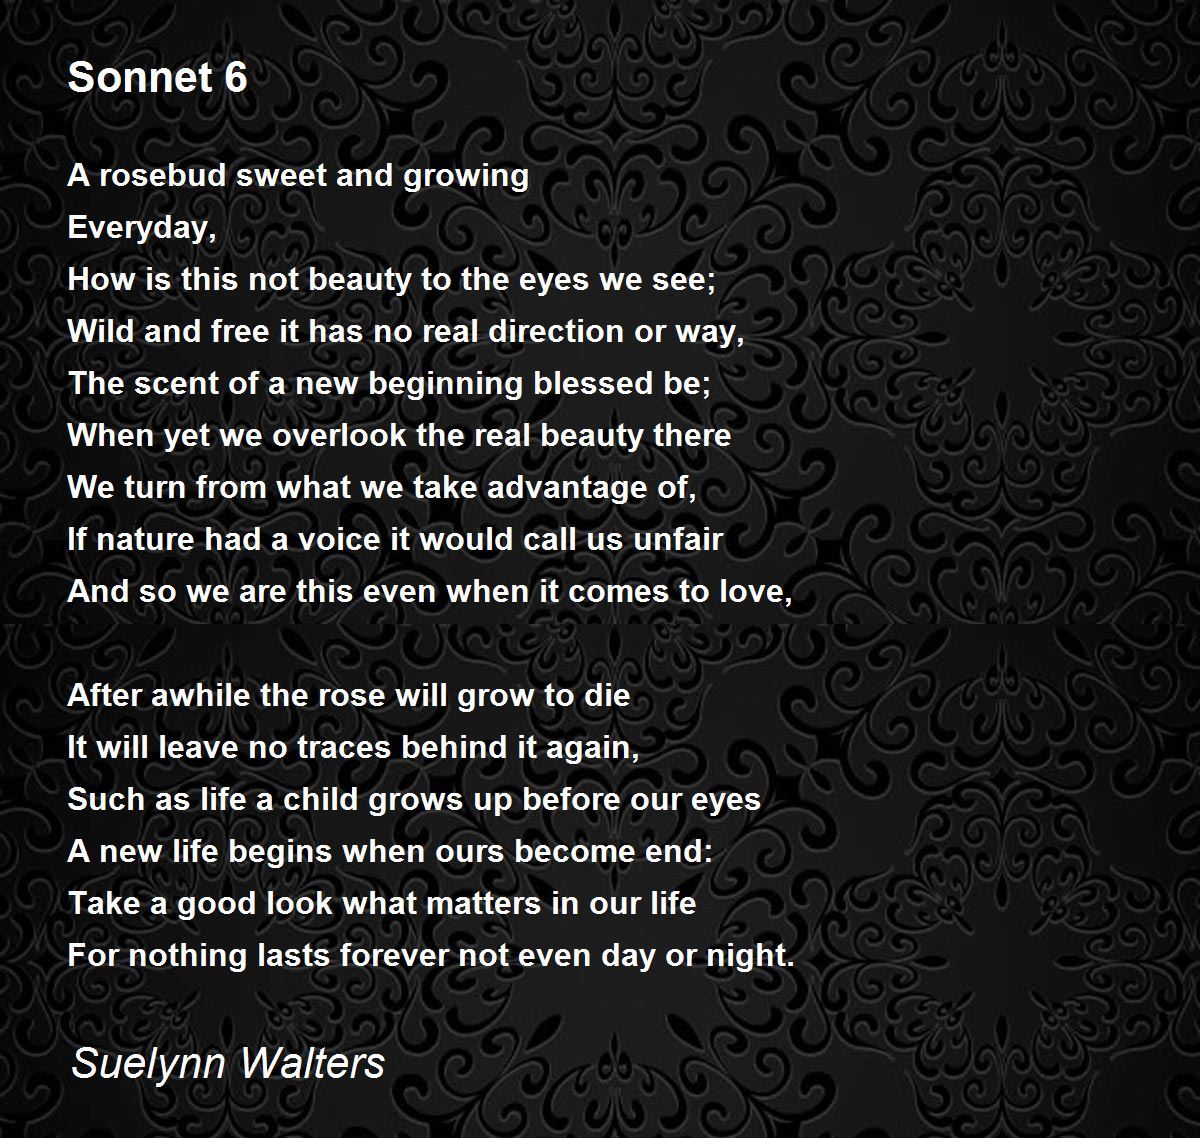 Sonet poem examples.